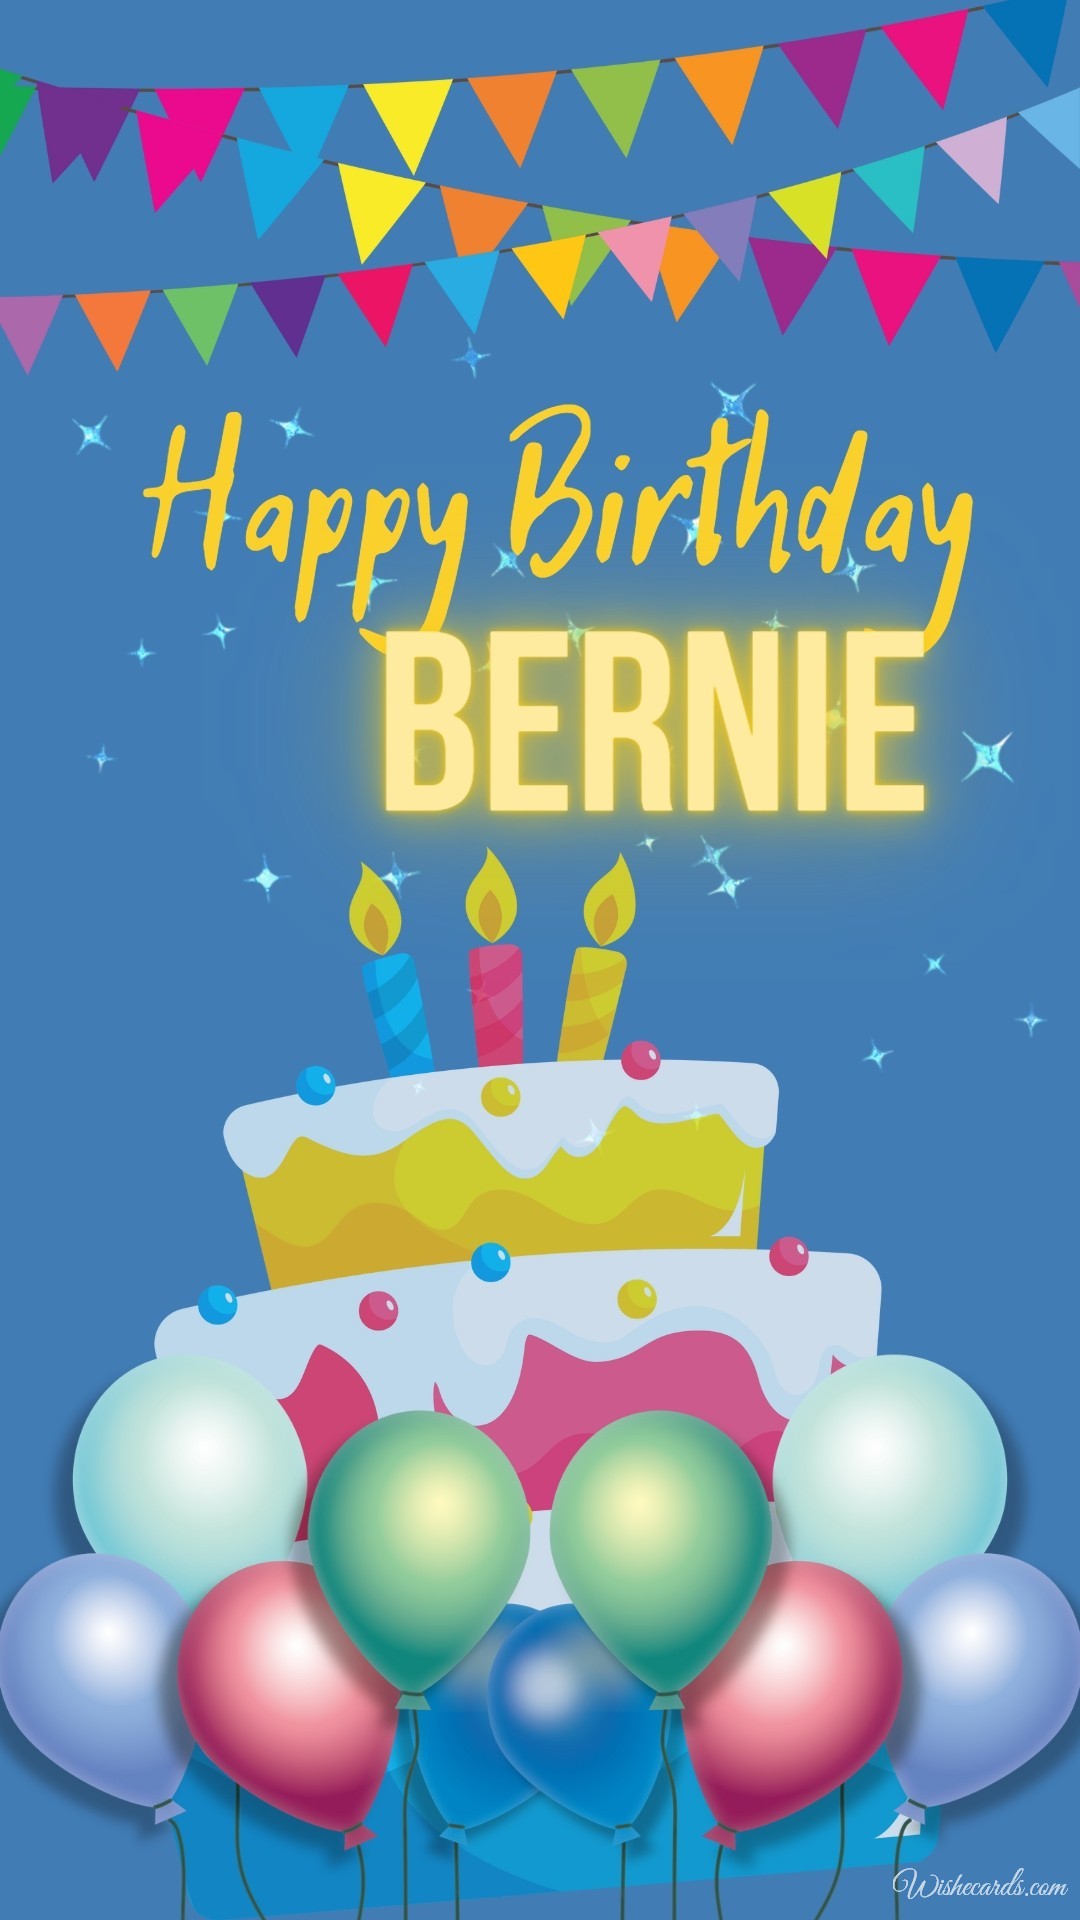 Happy Birthday Bernie Cake Image